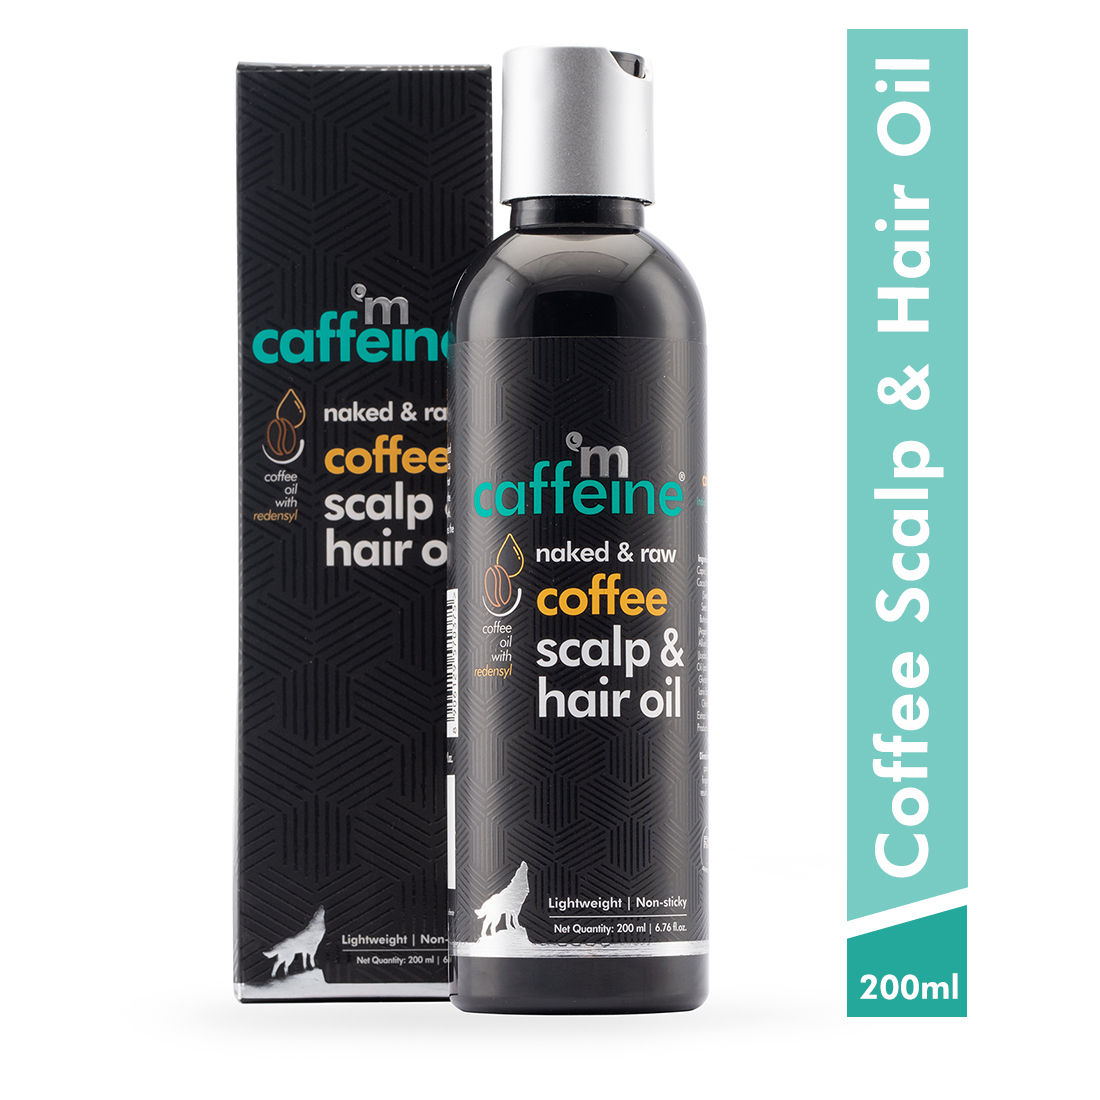 MCaffeine Naked & Raw Coffee Scalp & Hair Oil For Hair Growth with Redensyl & Argan Oil